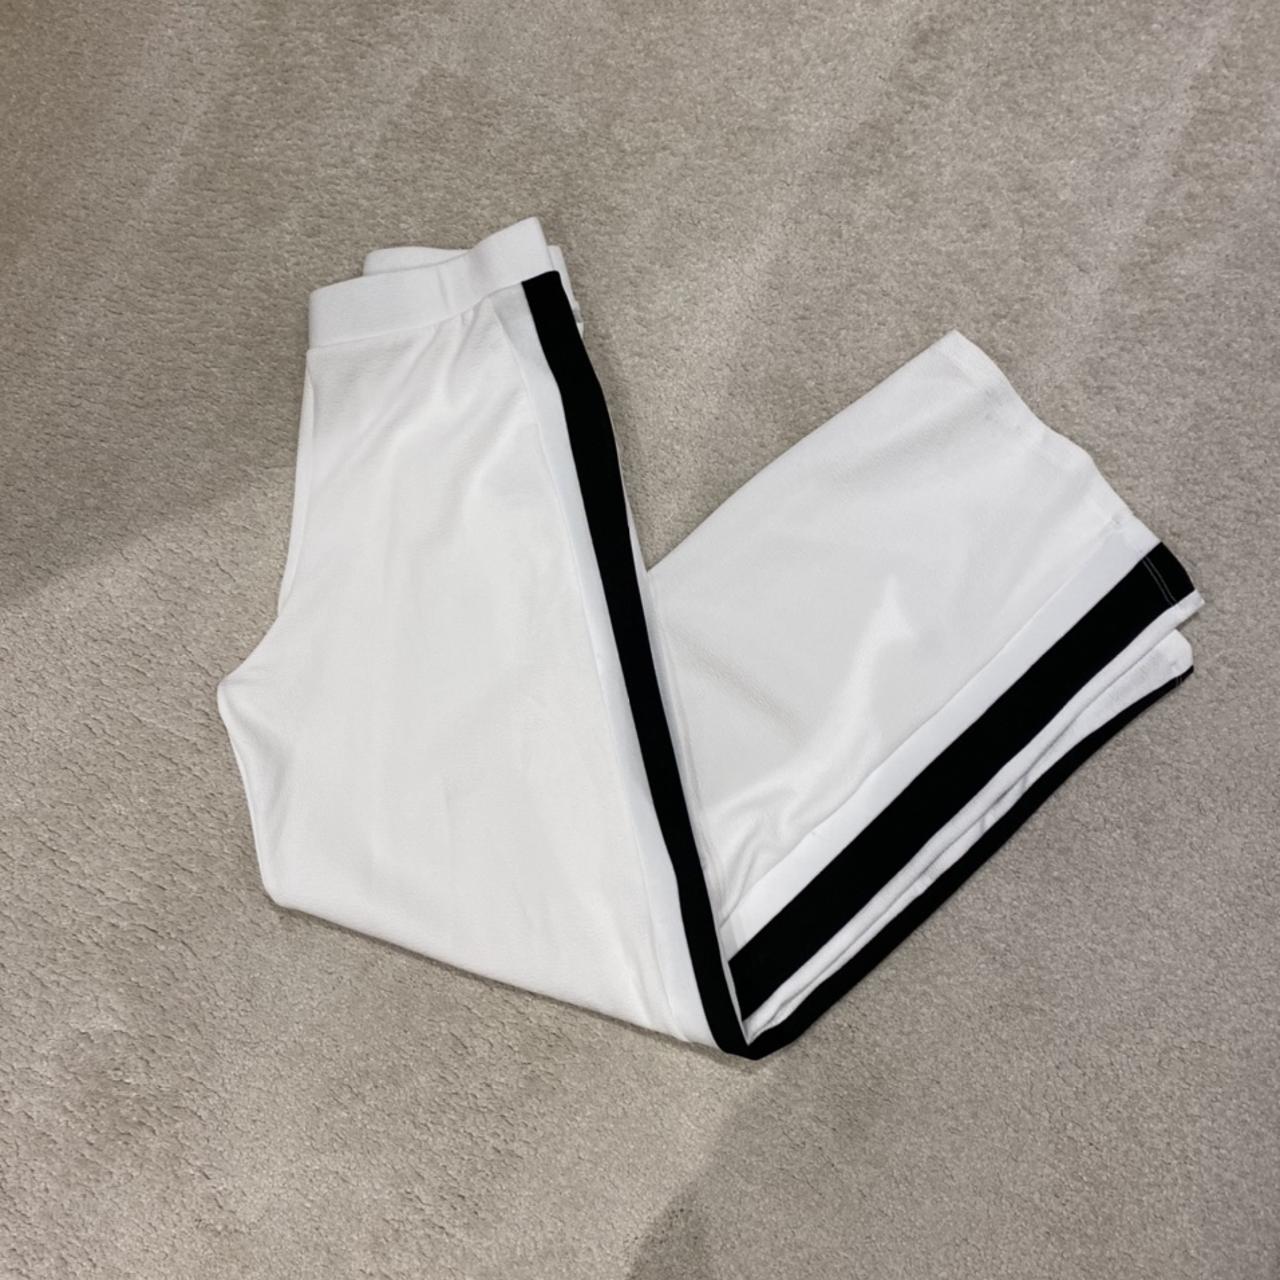 Zara  Pants  Jumpsuits  Zara Double Striped White Trousers With Black  Stripes Wide Straight Leg  Poshmark